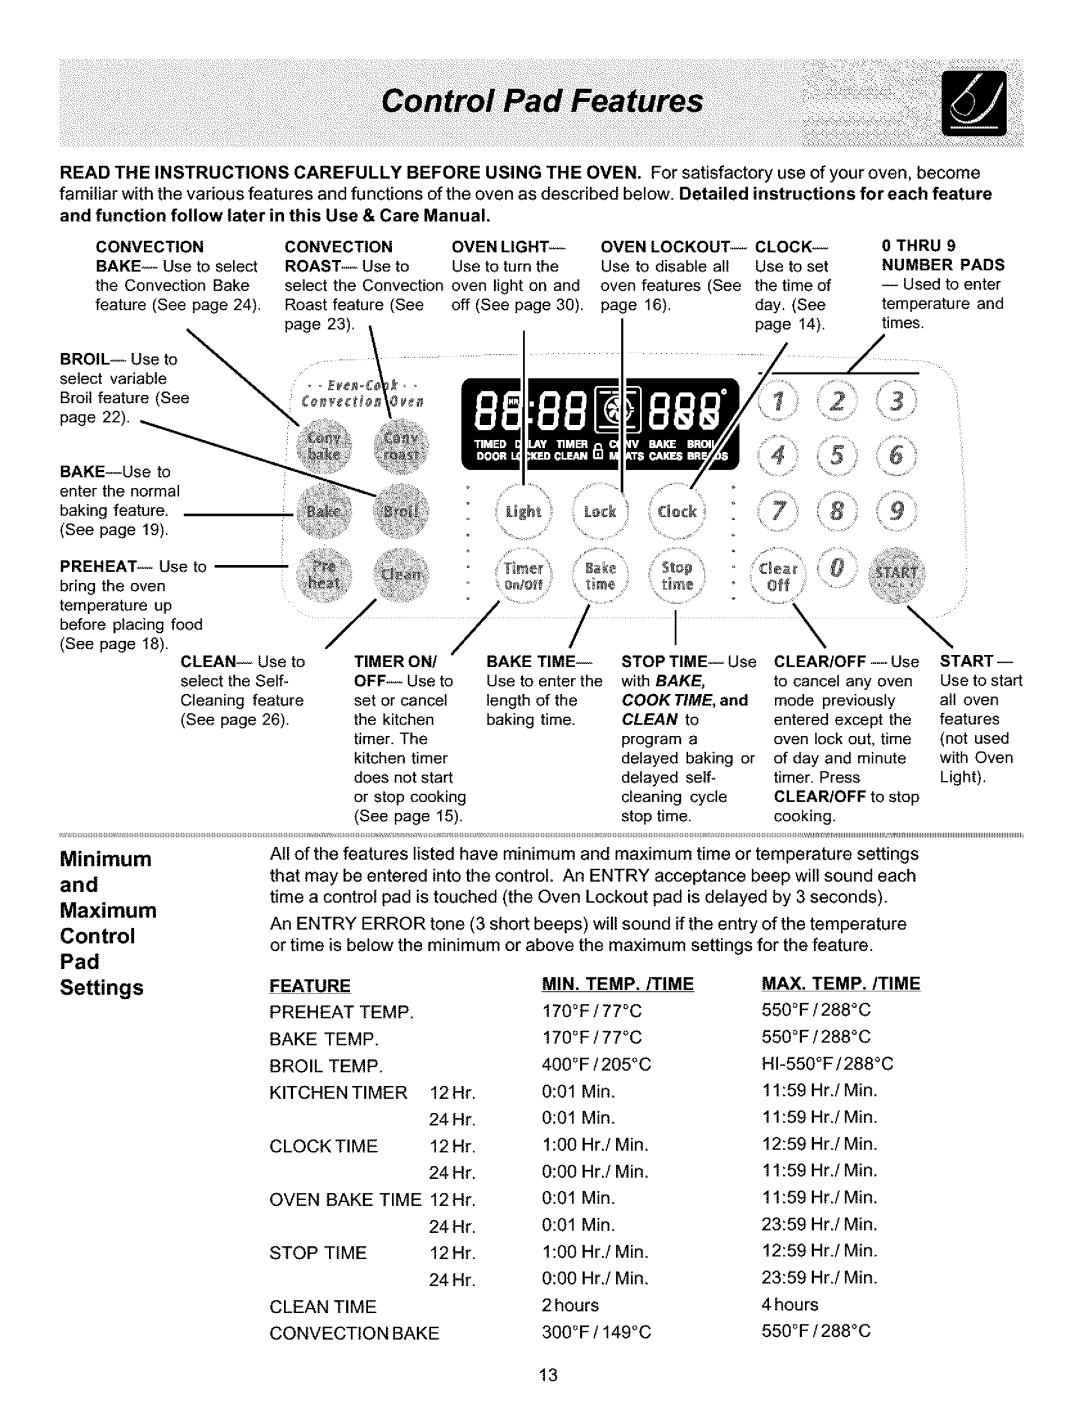 Frigidaire ES400 manual Minimum and Maximum Control Pad Settings, Feature, Min. Temp./Time, Max. Temp./Time, 170F/77C 